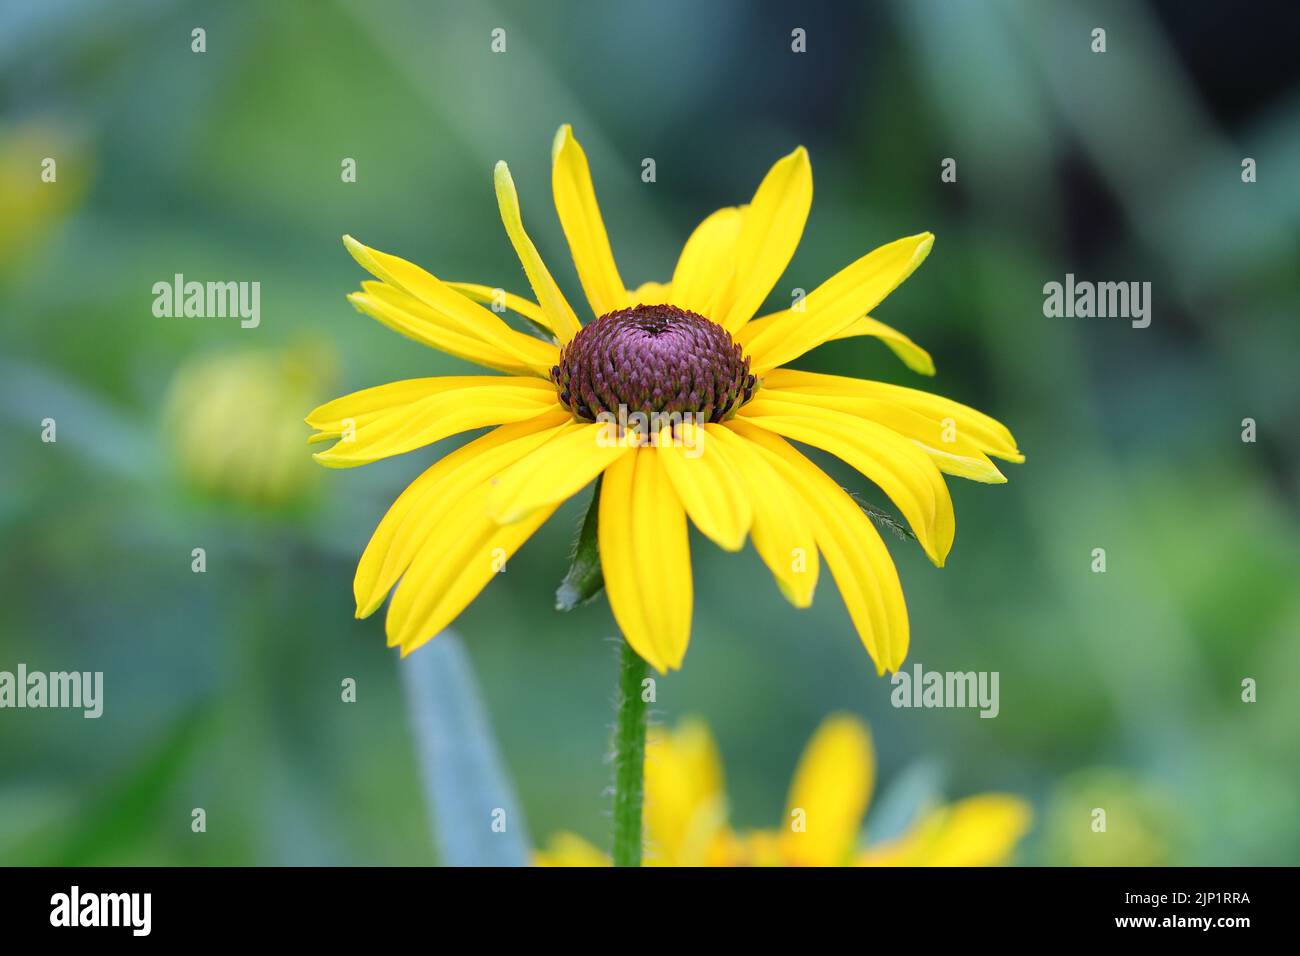 close-up of a single rudbeckia fulgida flower against a blurred background Stock Photo